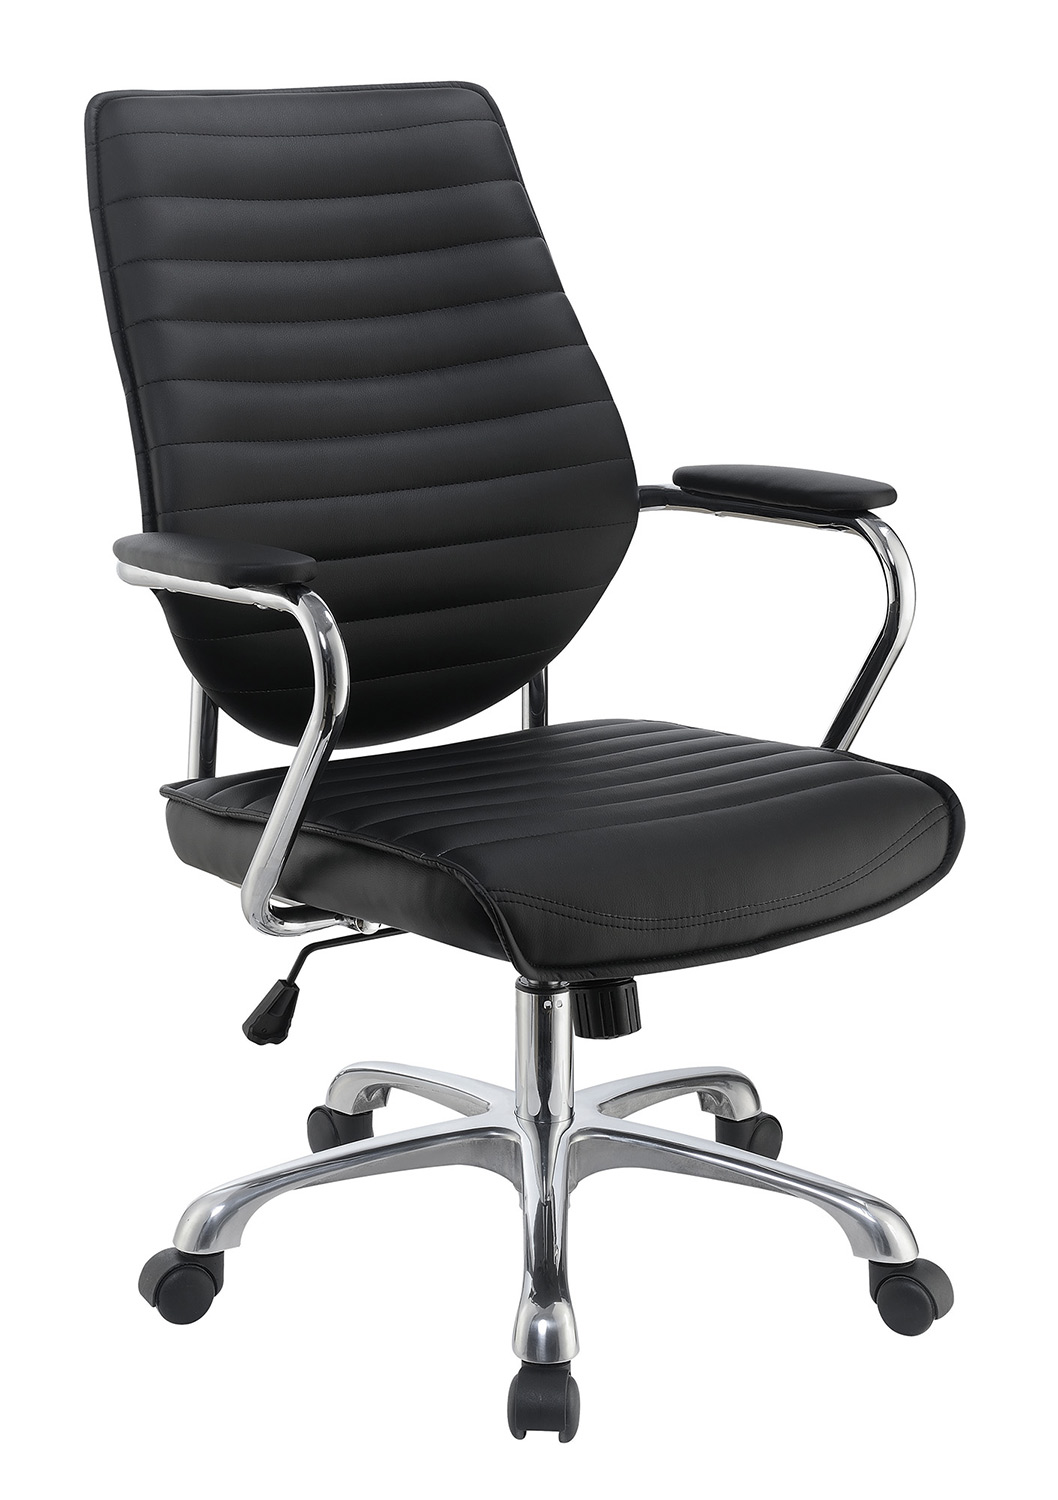 Coaster 801327 Office Chair - Black/Aluminum